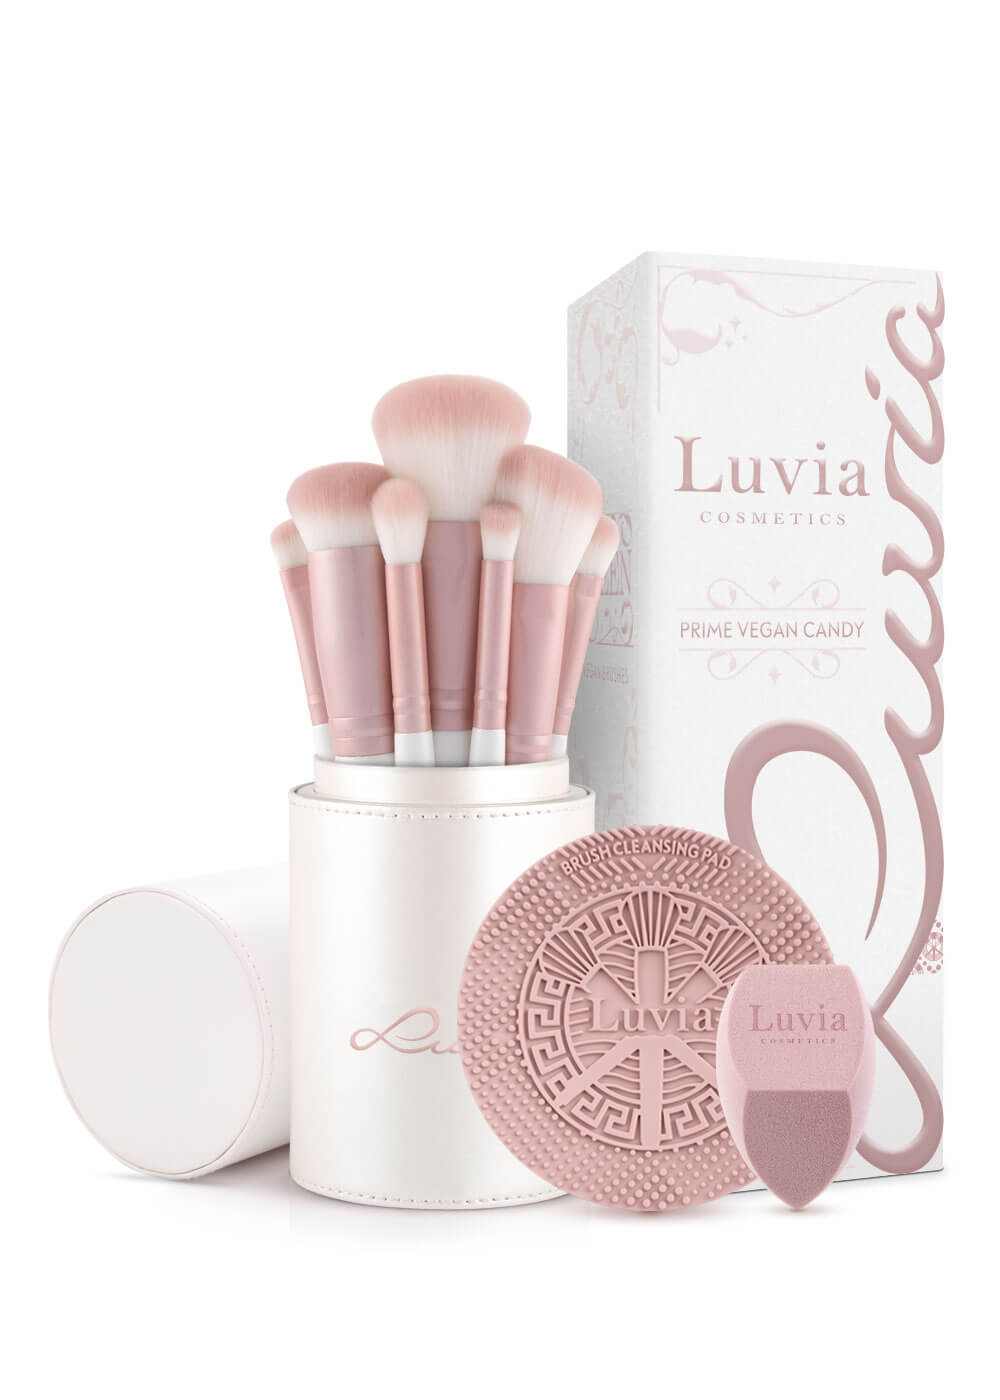 Candy Cosmetics Luvia – Prime Vegan